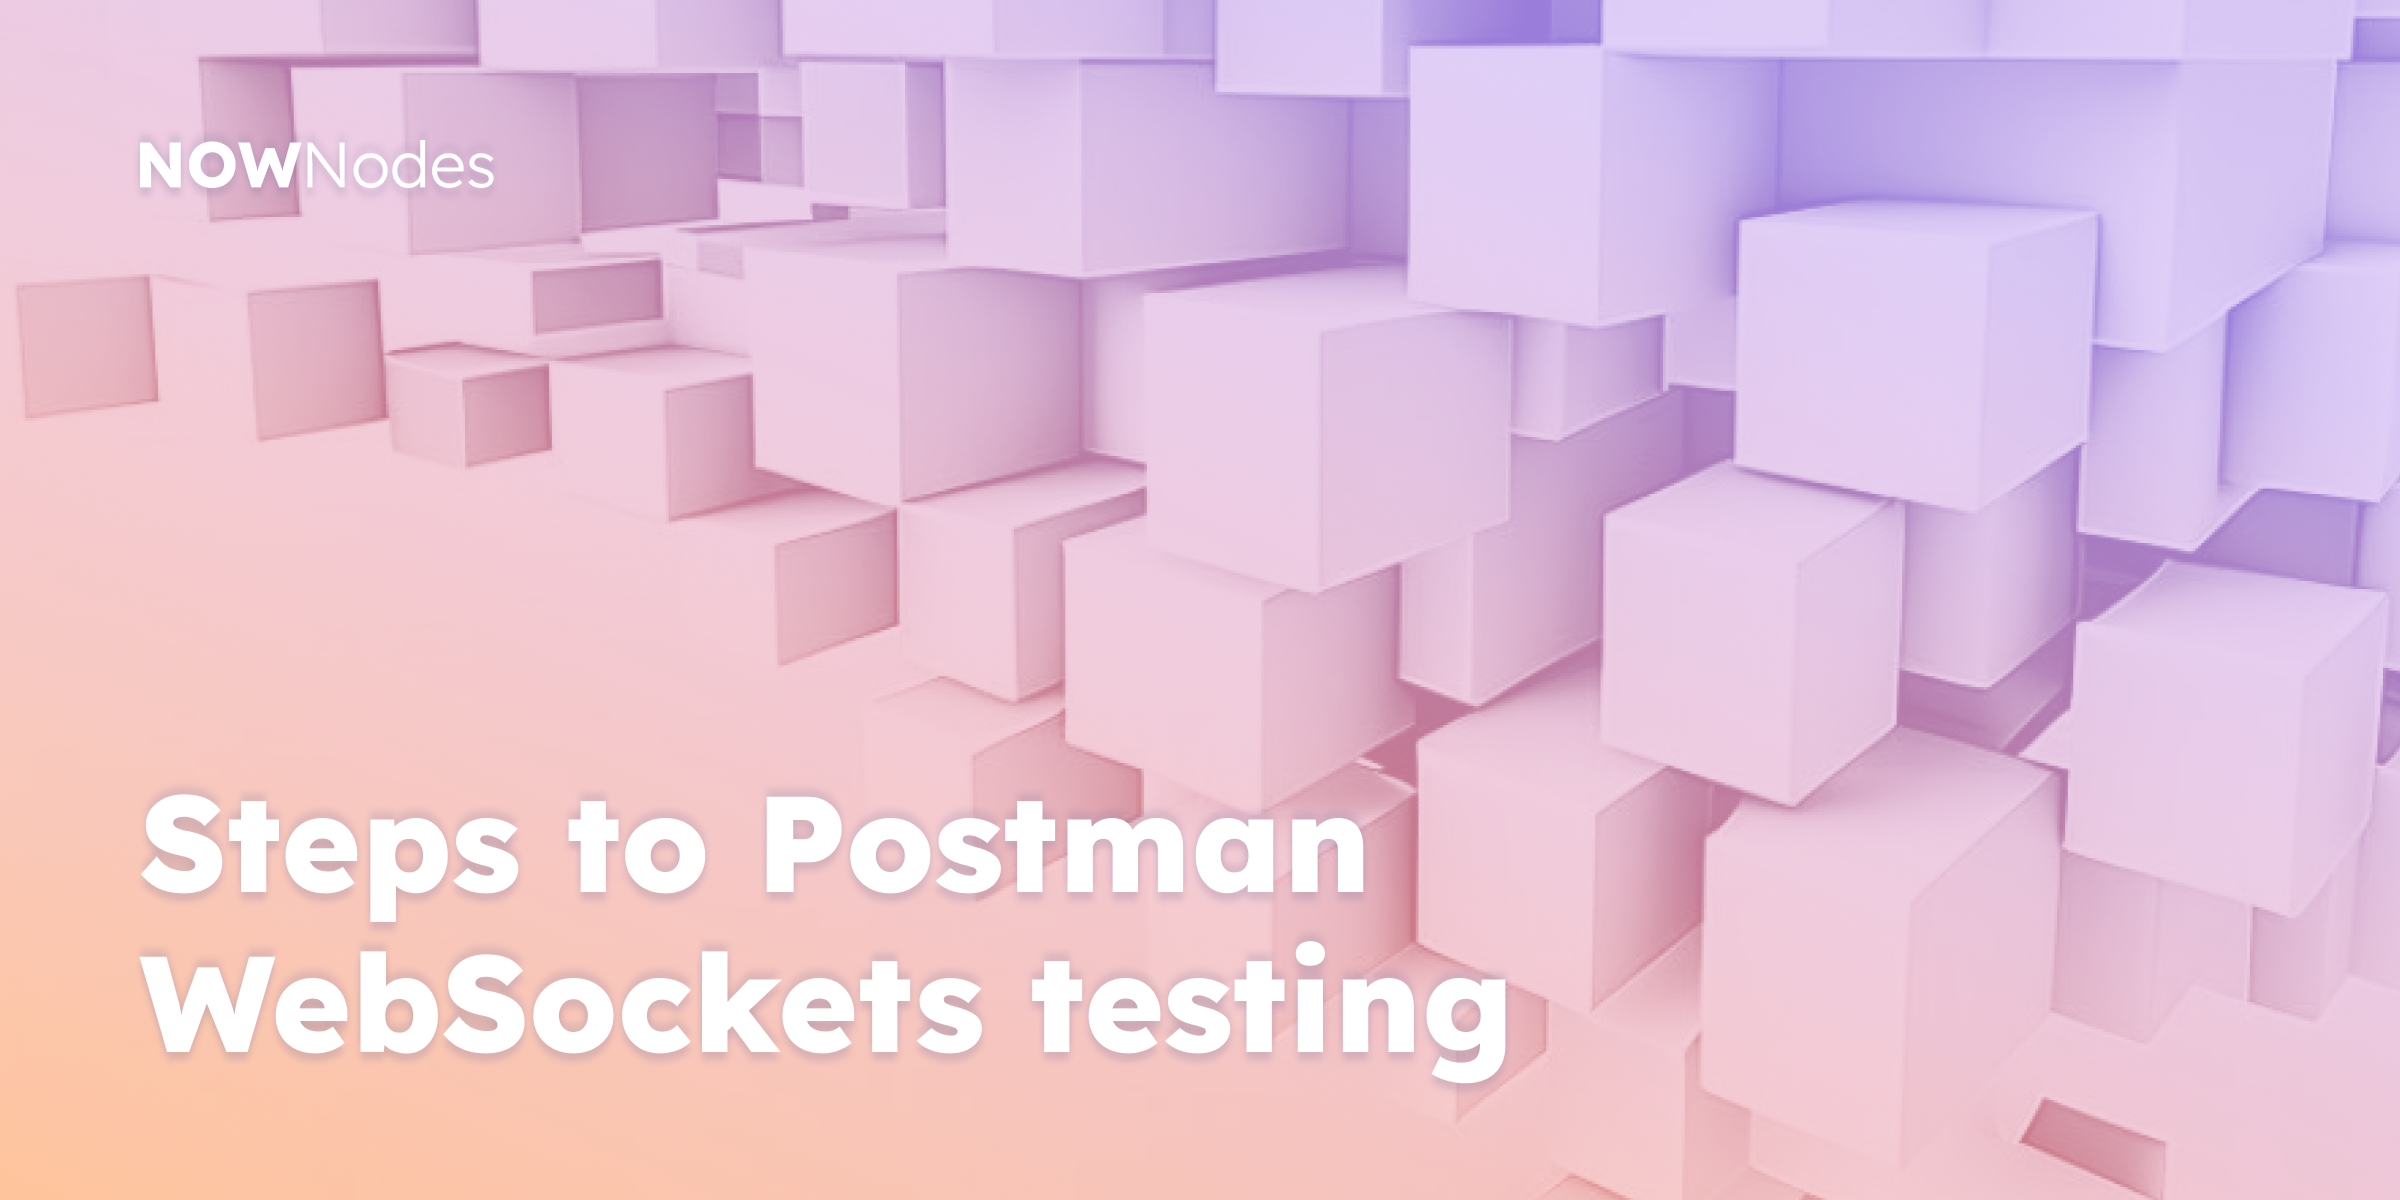 Steps to Postman WebSockets testing 
NOWNodes